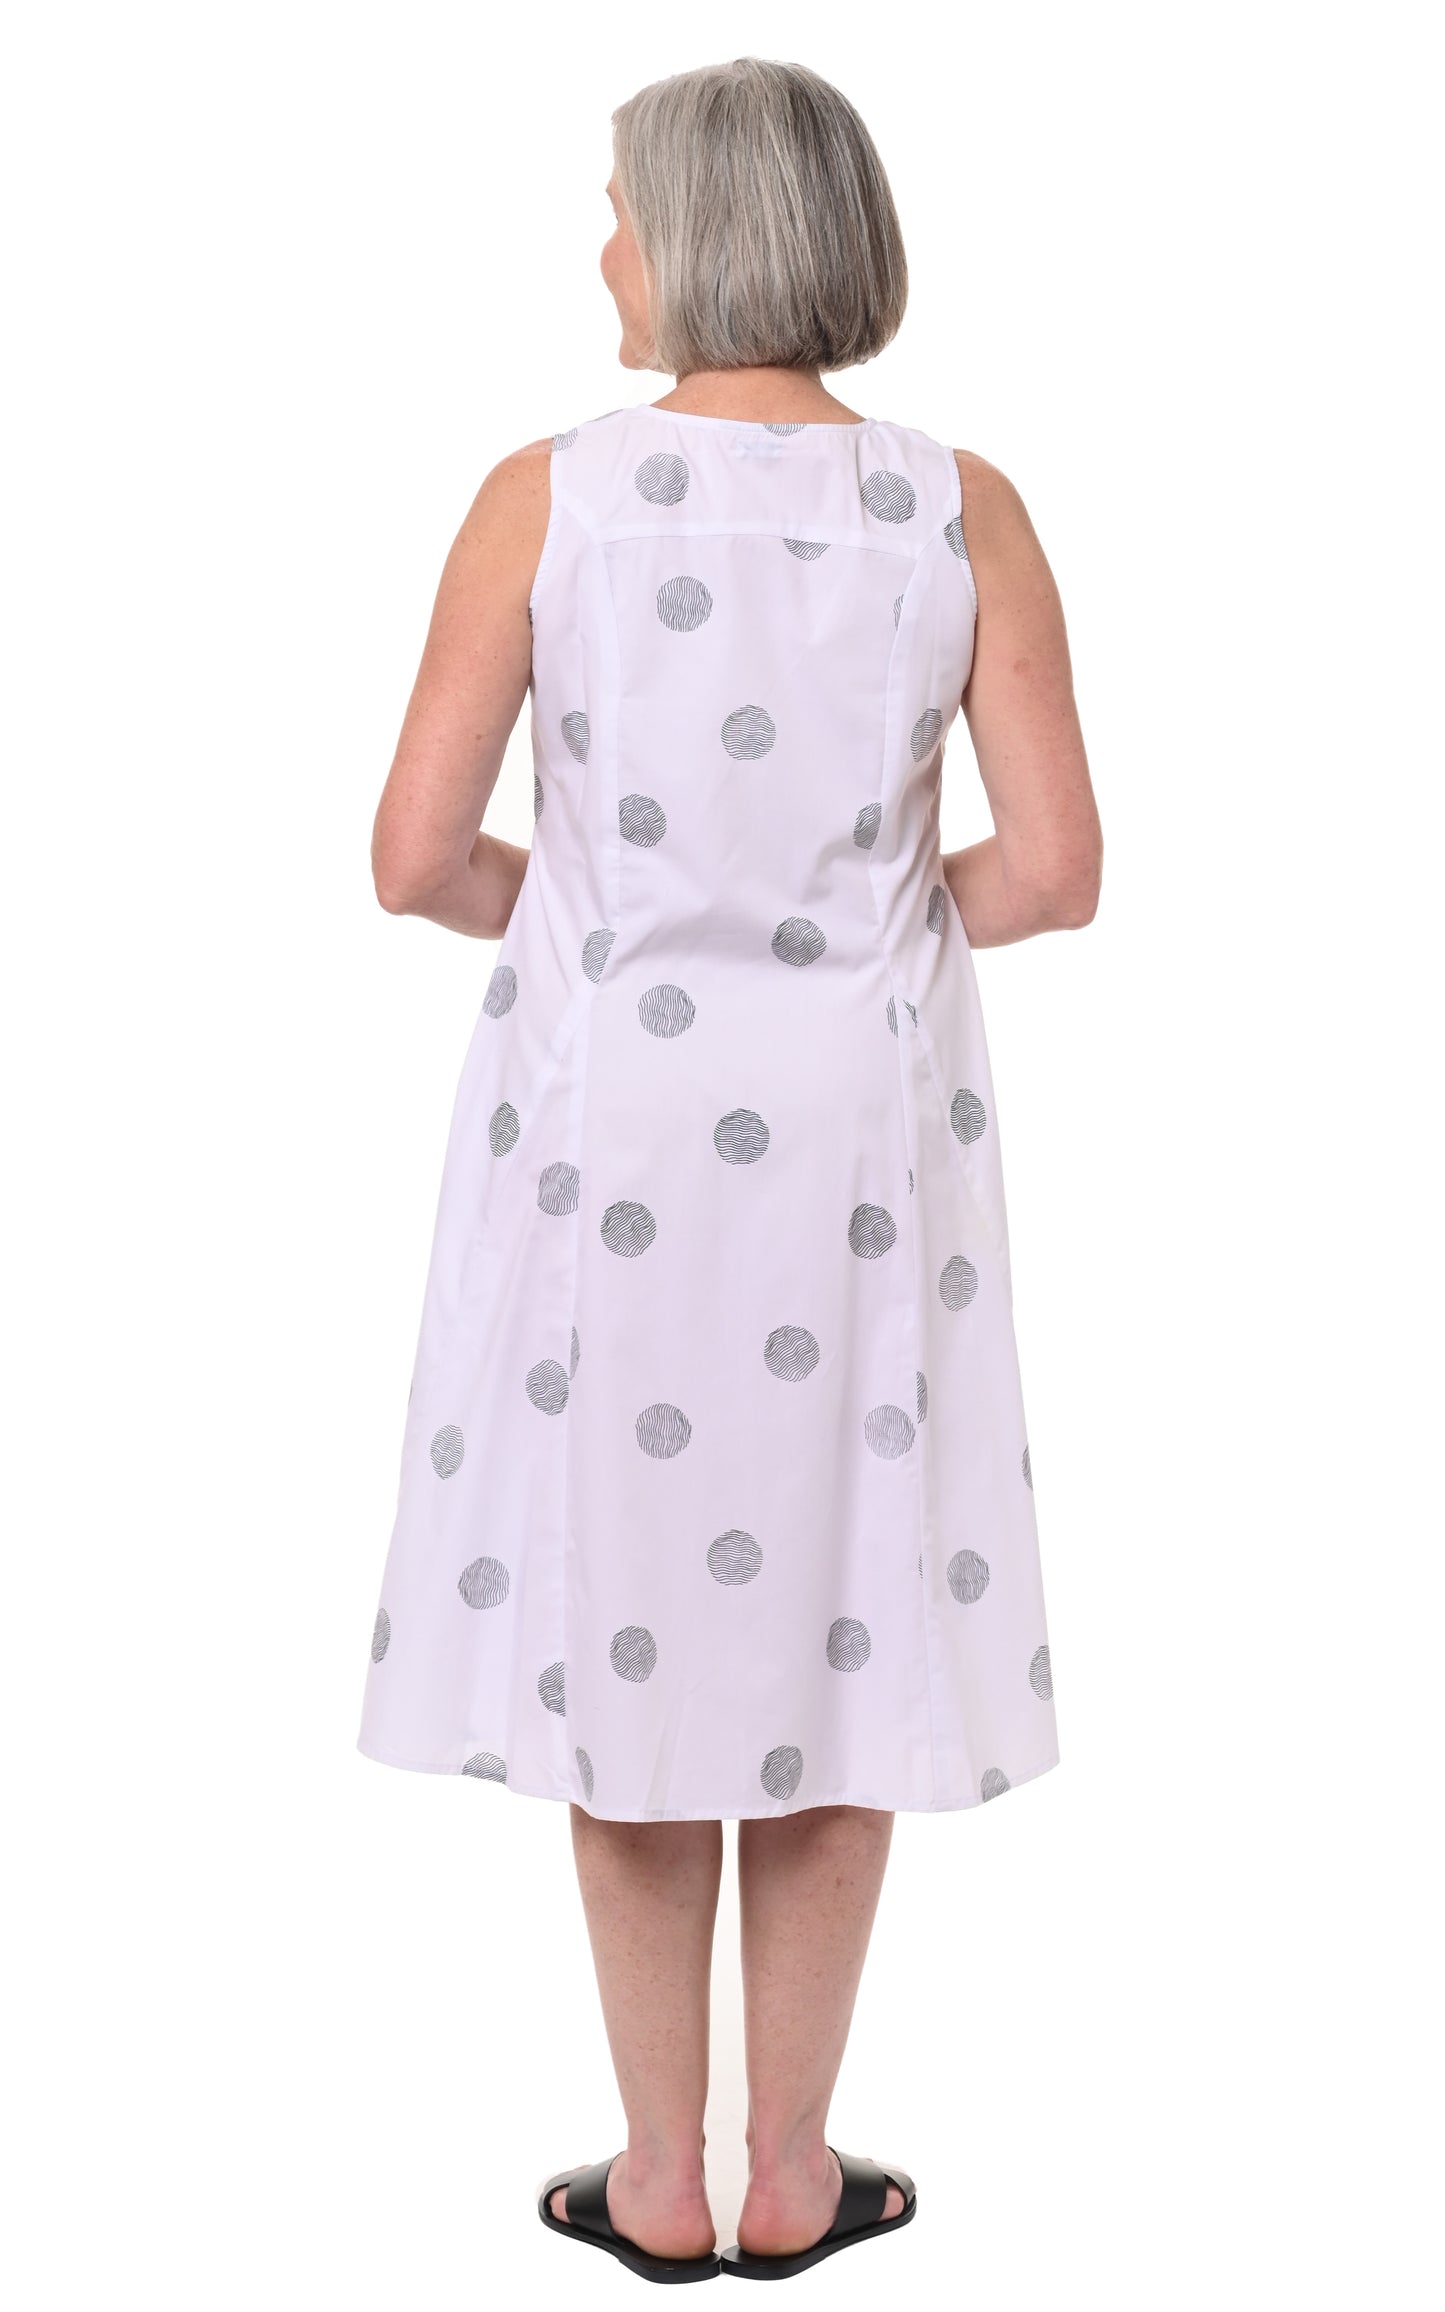 FINAL SALE CV656 Poppie Dress in White Thumbprint